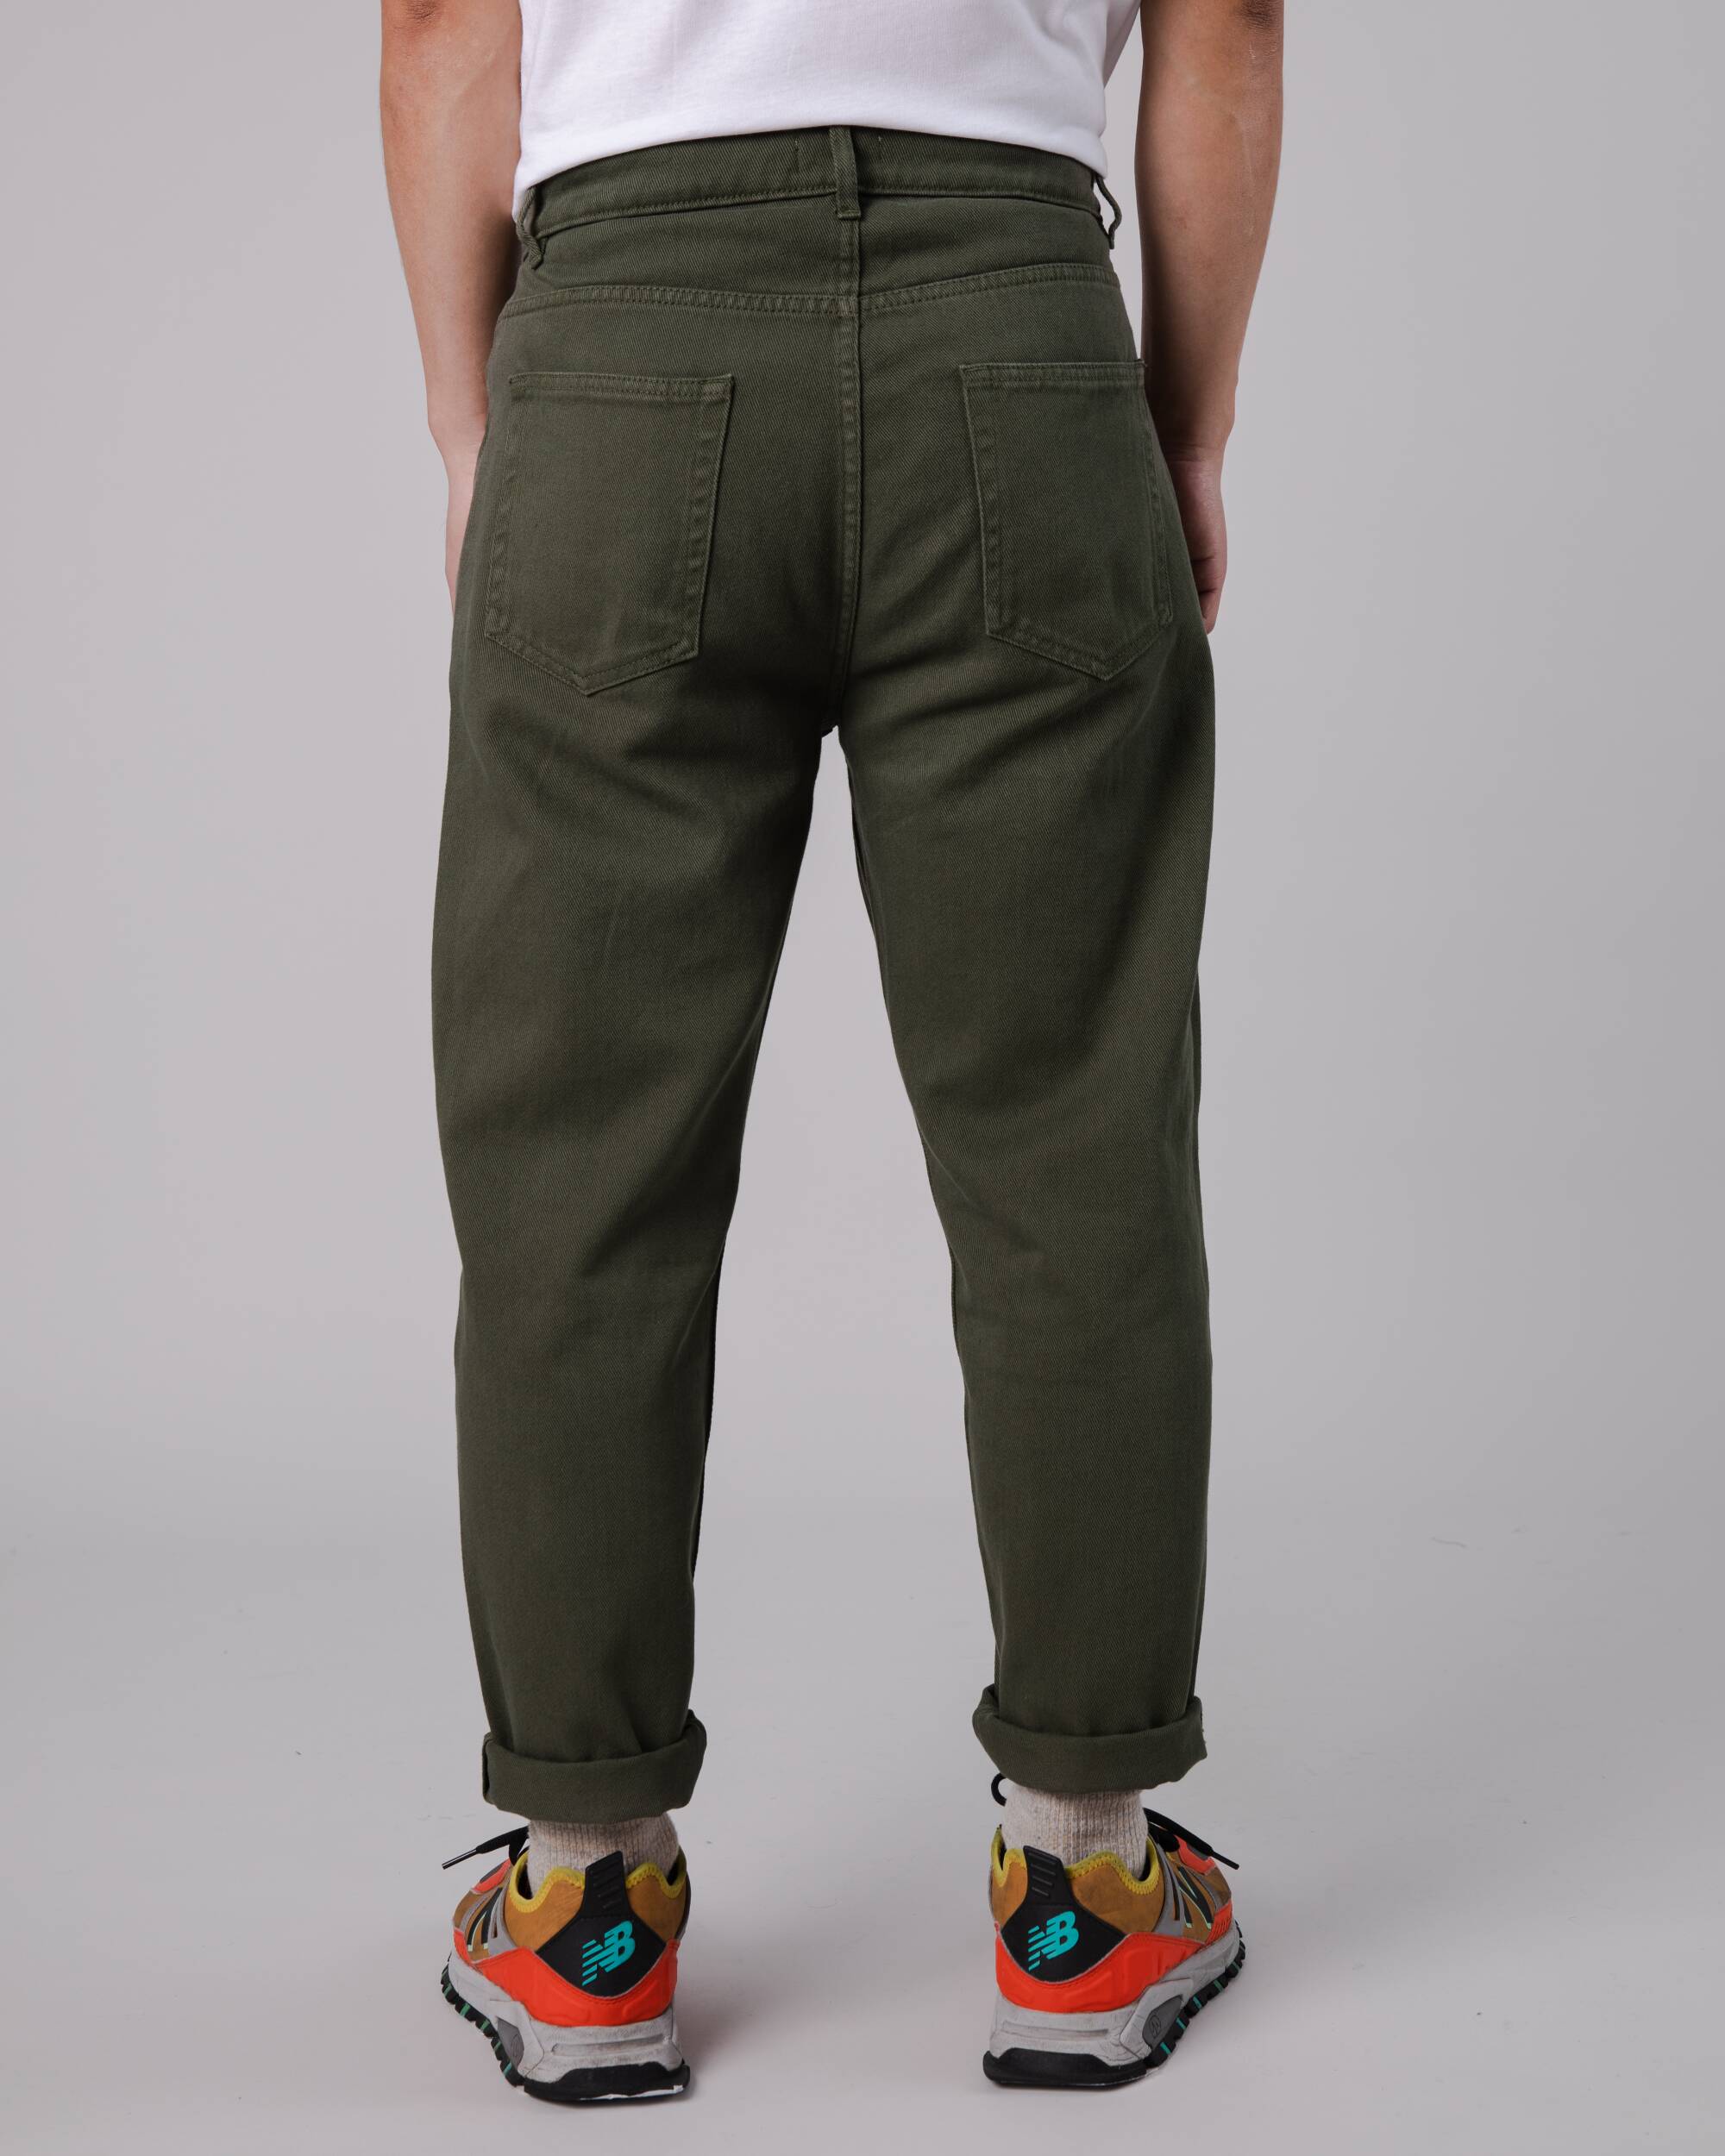 Green 5 Pocket Stone pants made of organic cotton from Brava Fabrics